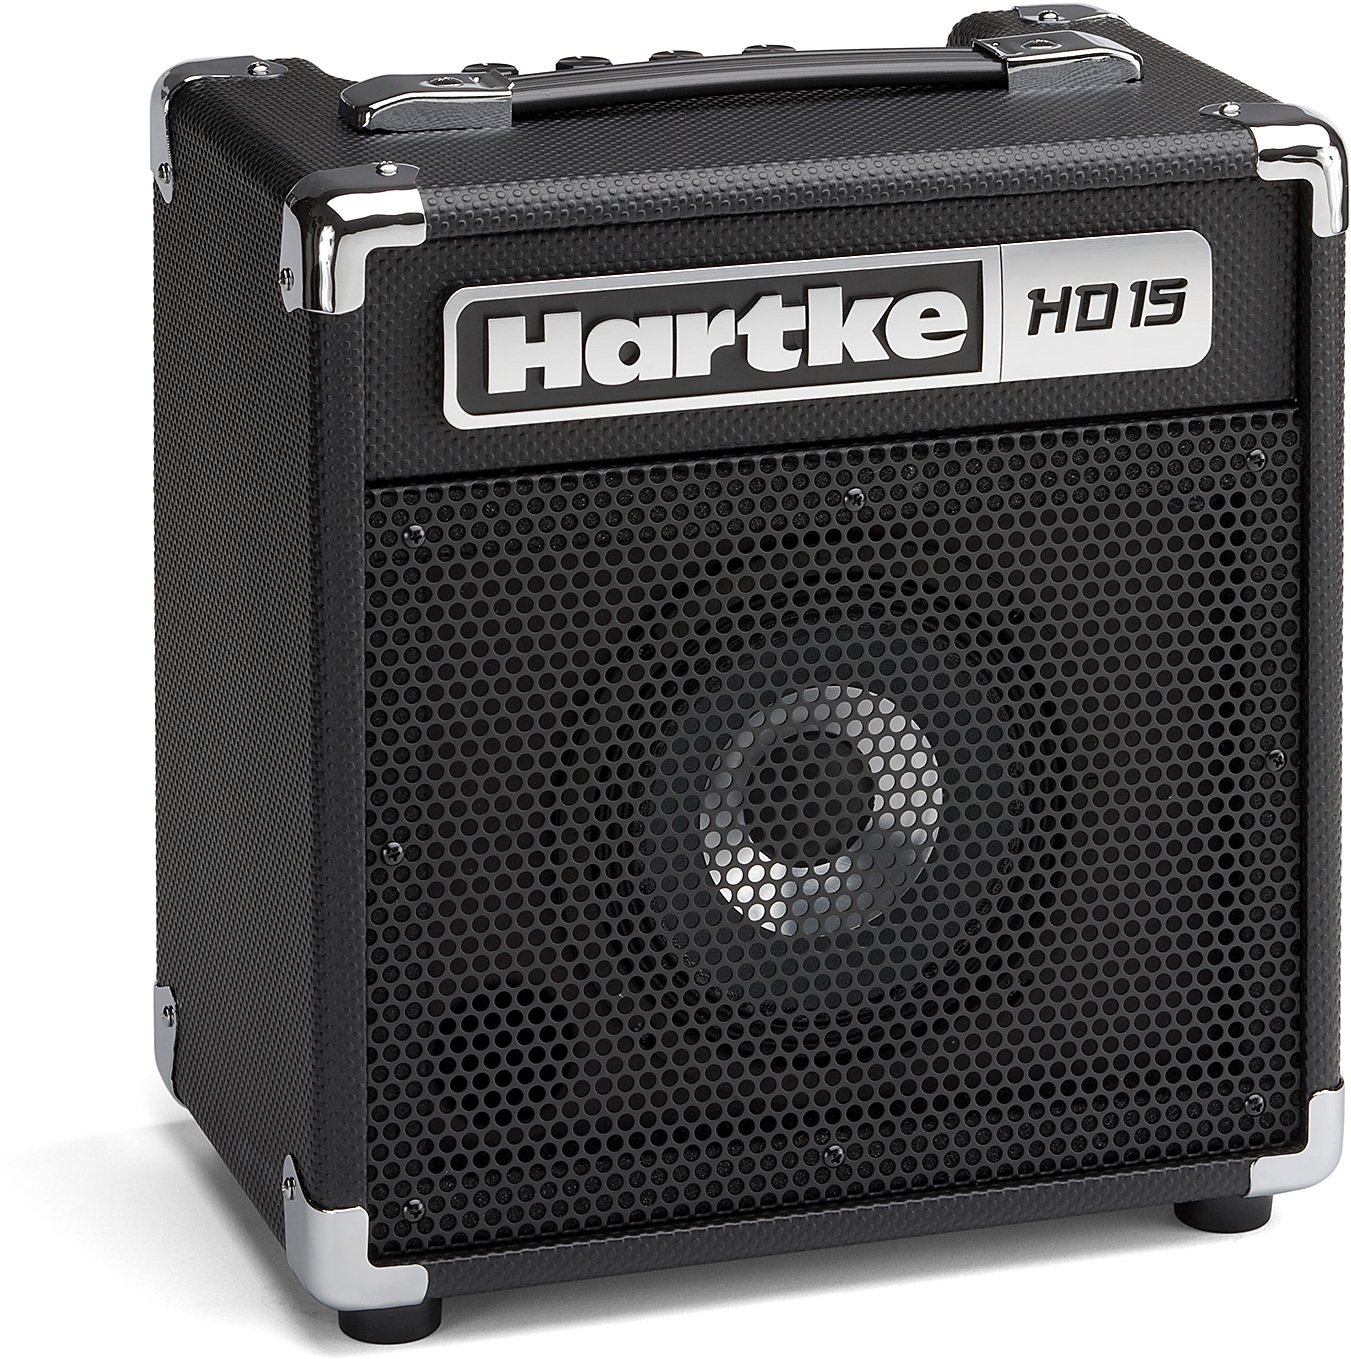 Hartke Hd15 Combo 6.5 - Bass combo amp - Main picture